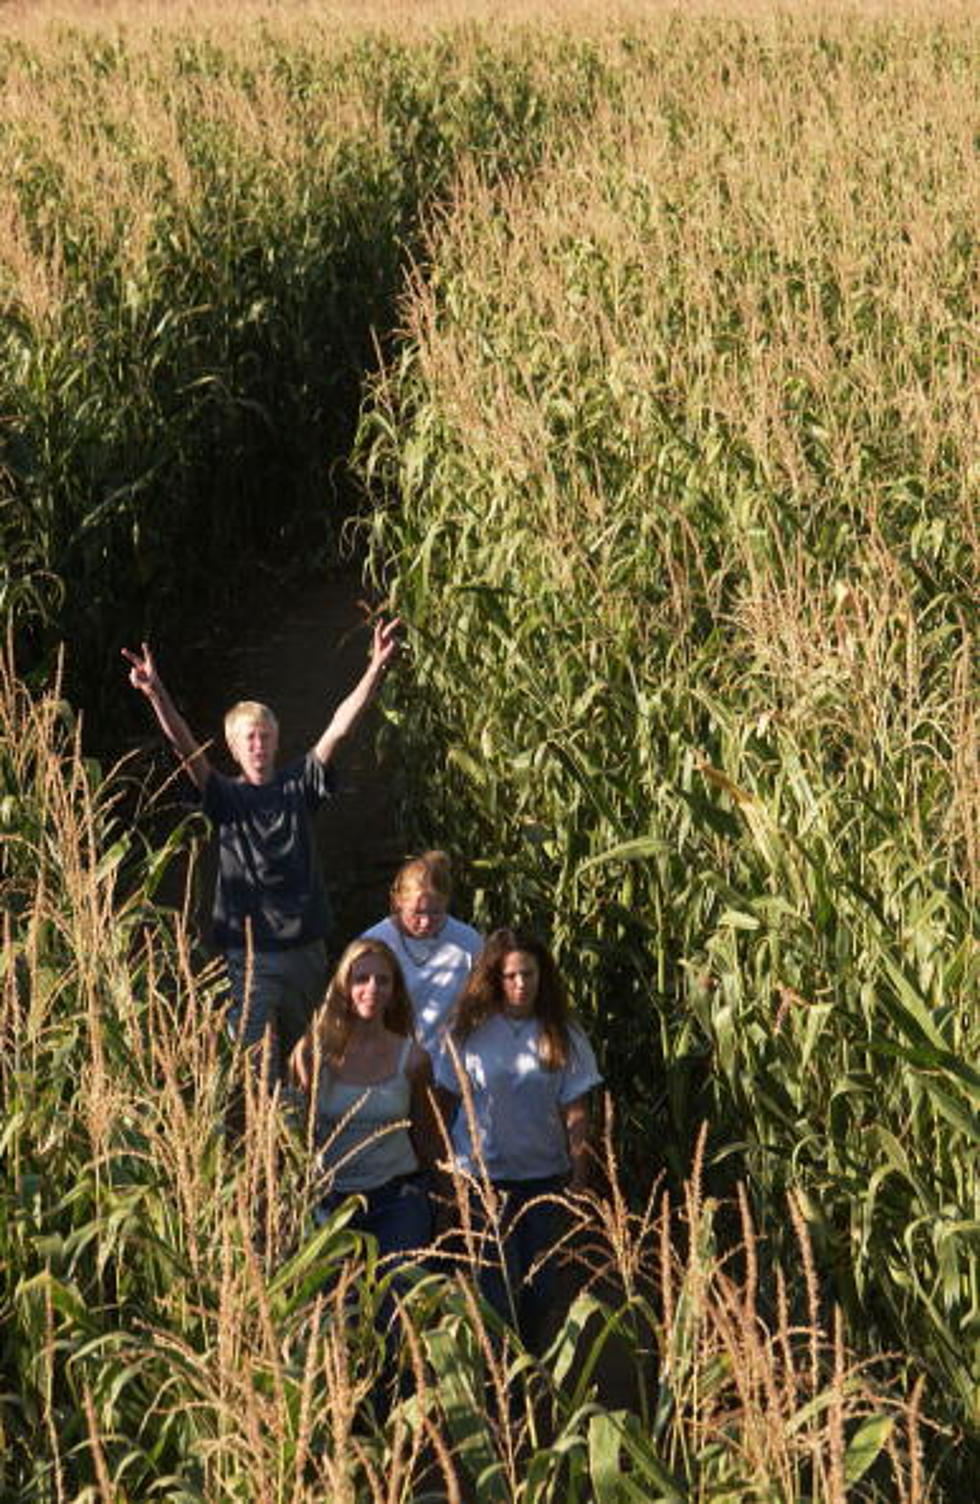 Family Lost In Massachusetts Corn Maze Calls 911